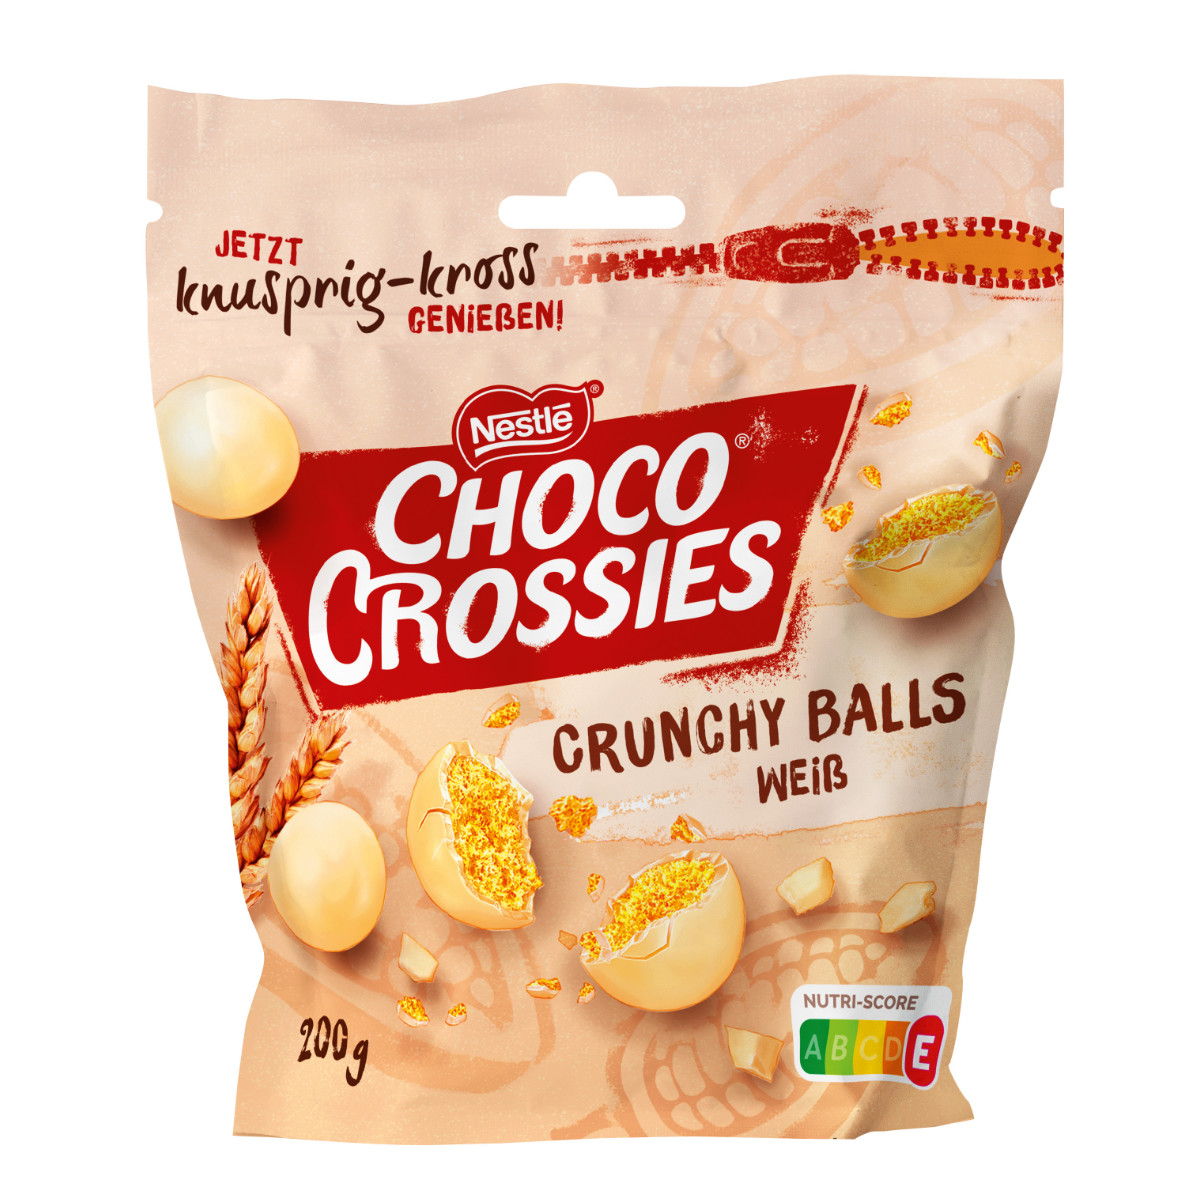 Choco Crossies Crunchy Balls weiße Schokolade